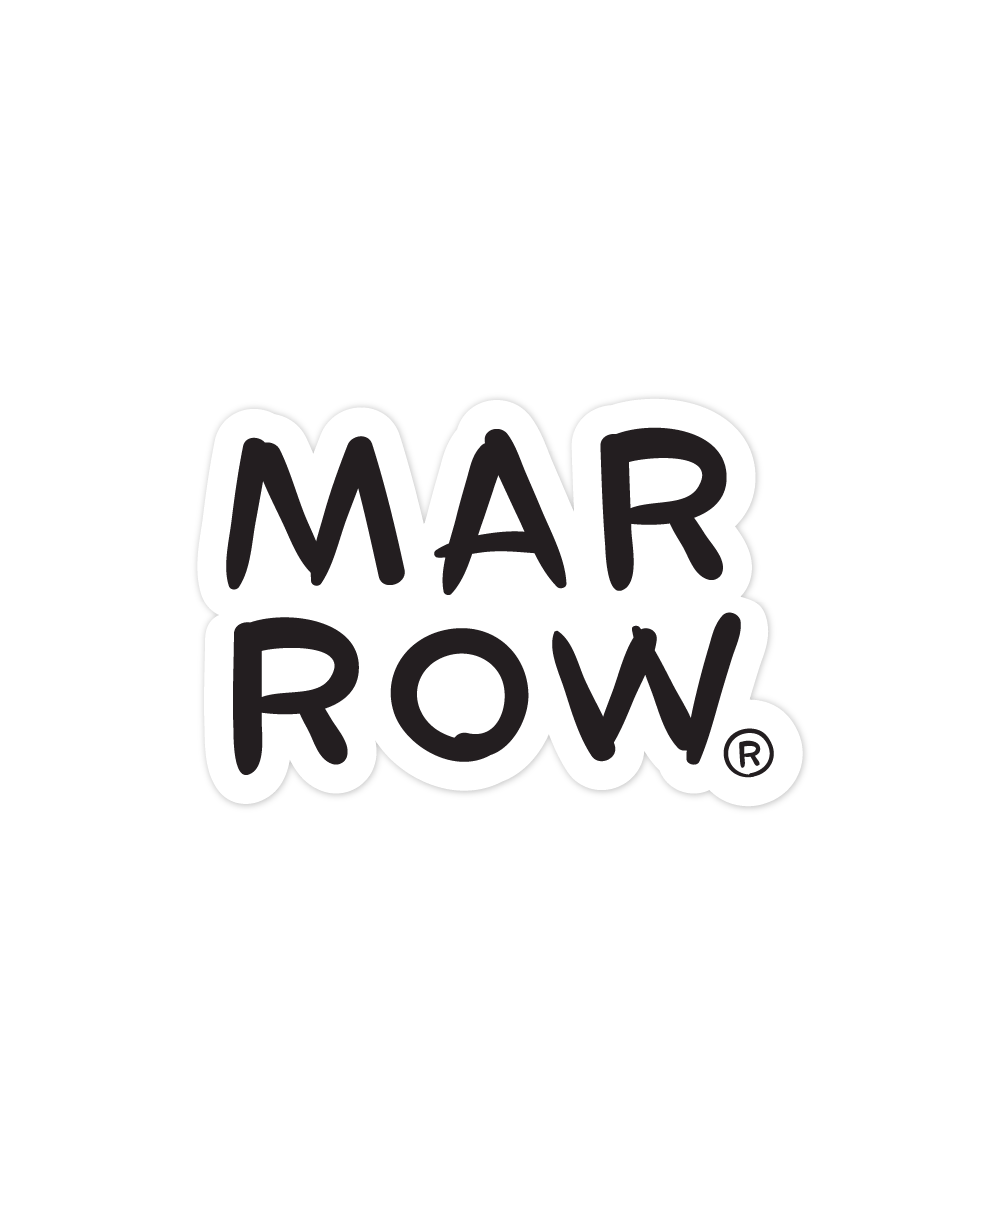 Marrow Slap sticker